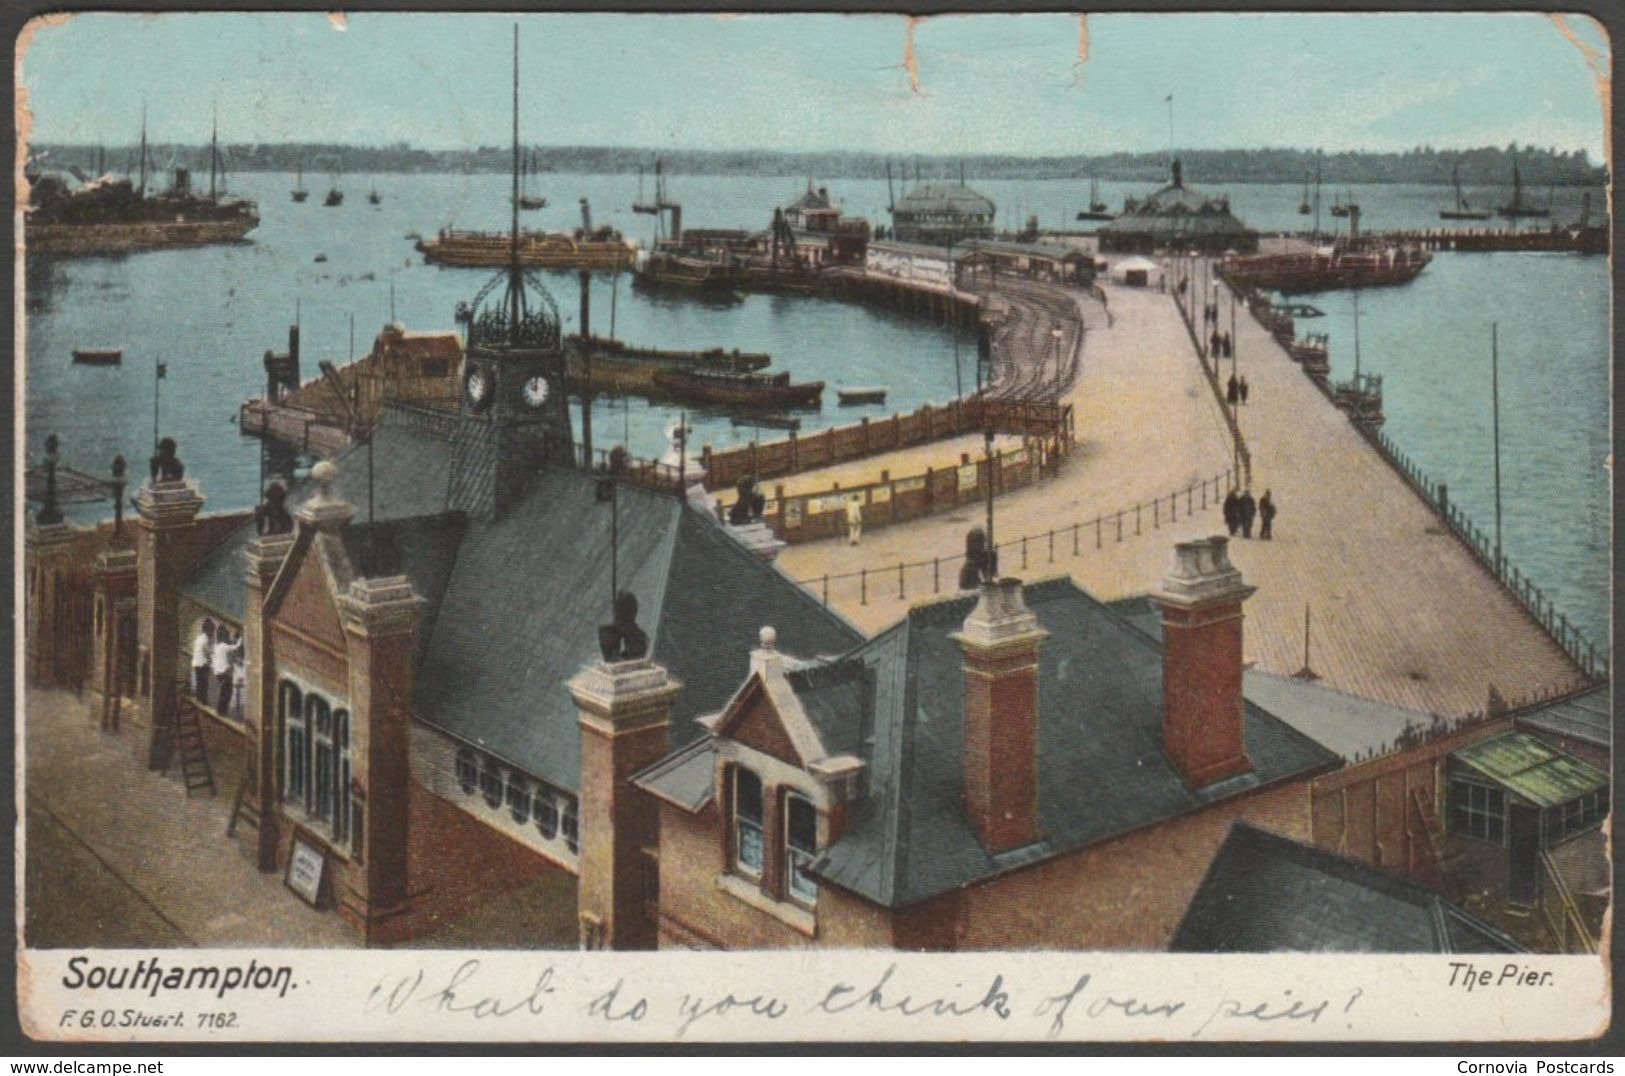 The Pier, Southampton, Hampshire, 1903 - FGO Stuart Postcard - Southampton